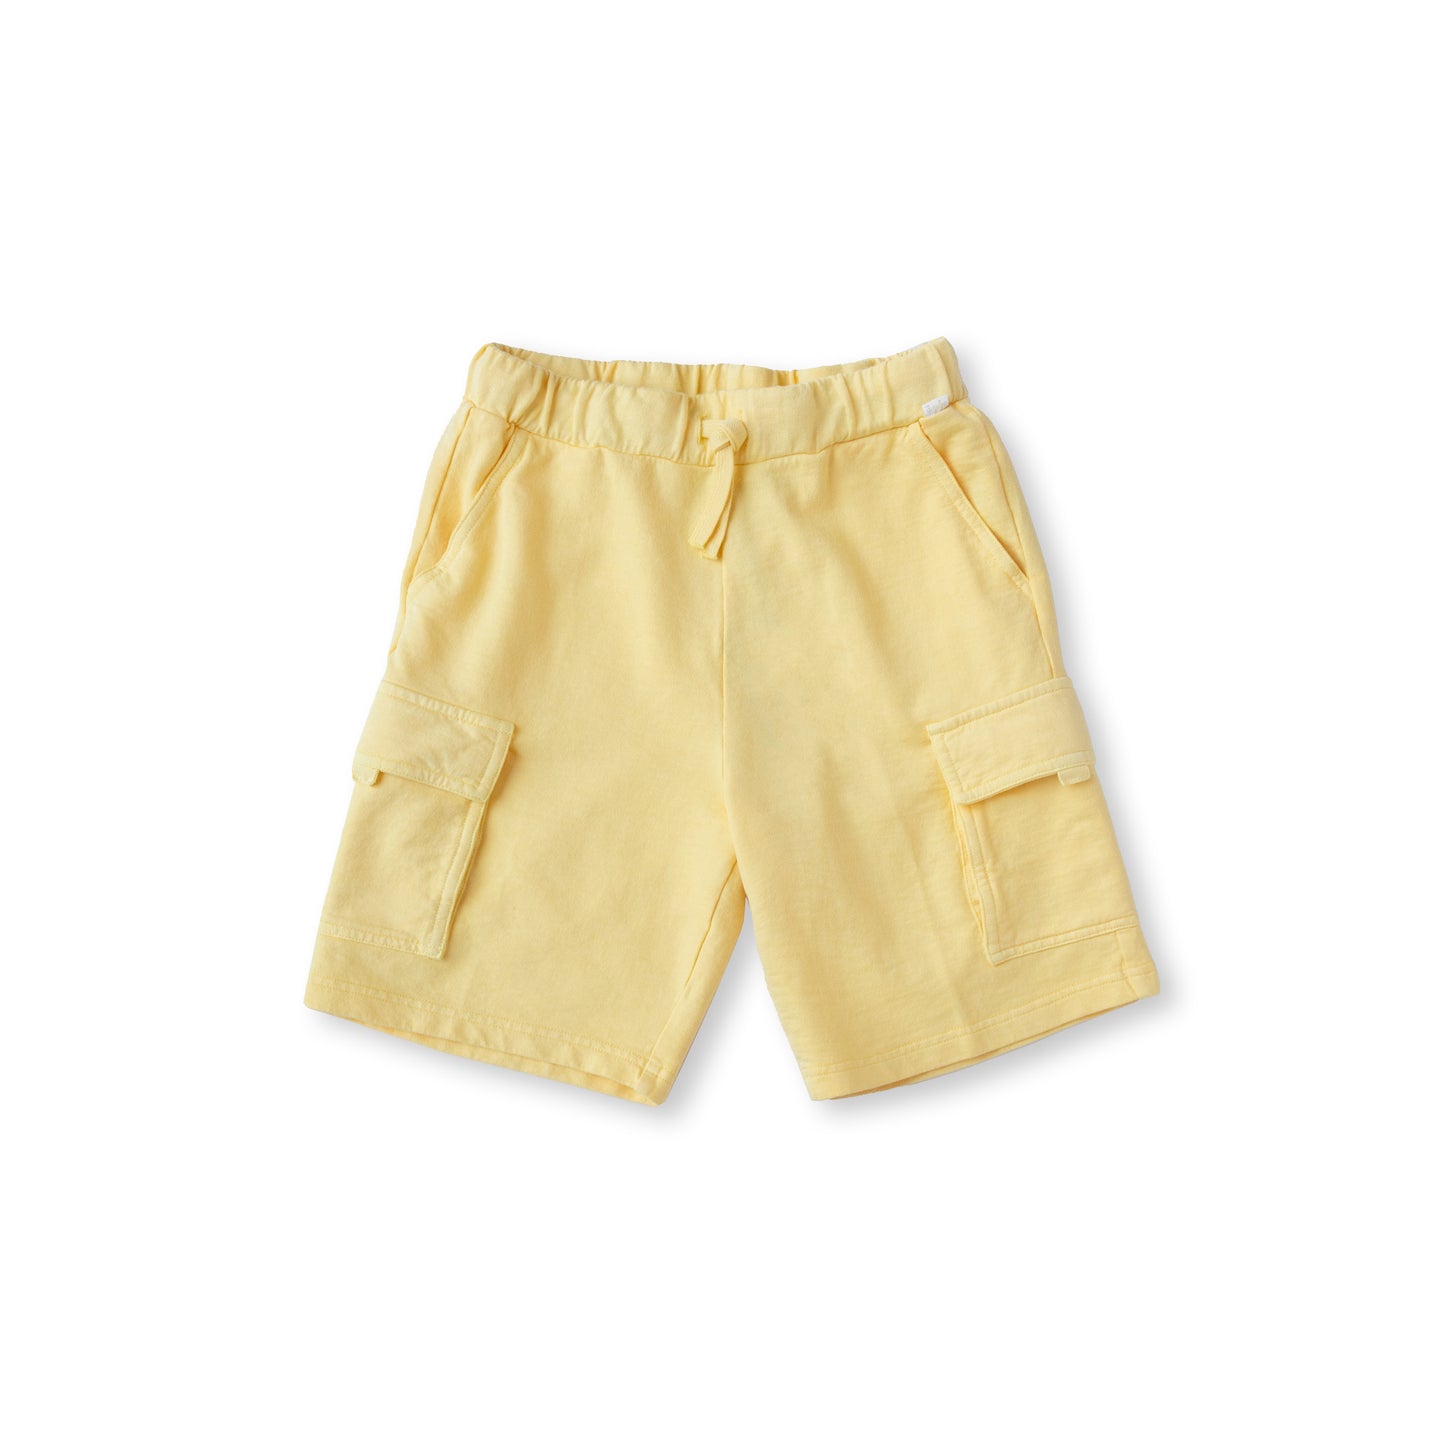 IL GUFO - Bermuda Shorts Cargo yellow